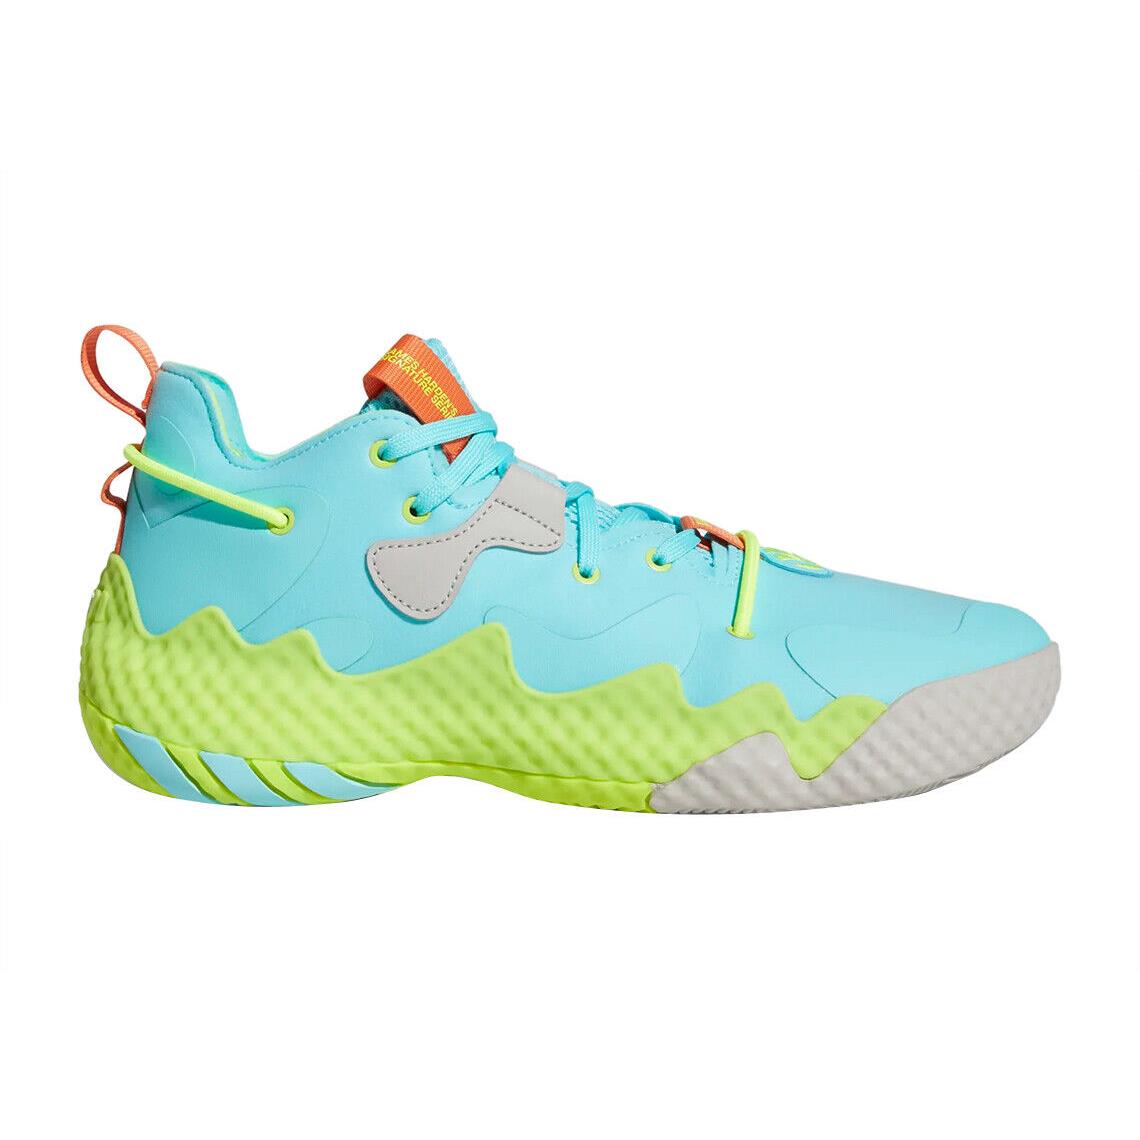 Adidas Men`s Harden Vol. 6 Pulse Basketball Shoes in Aqua Solar Yellow US Sizes